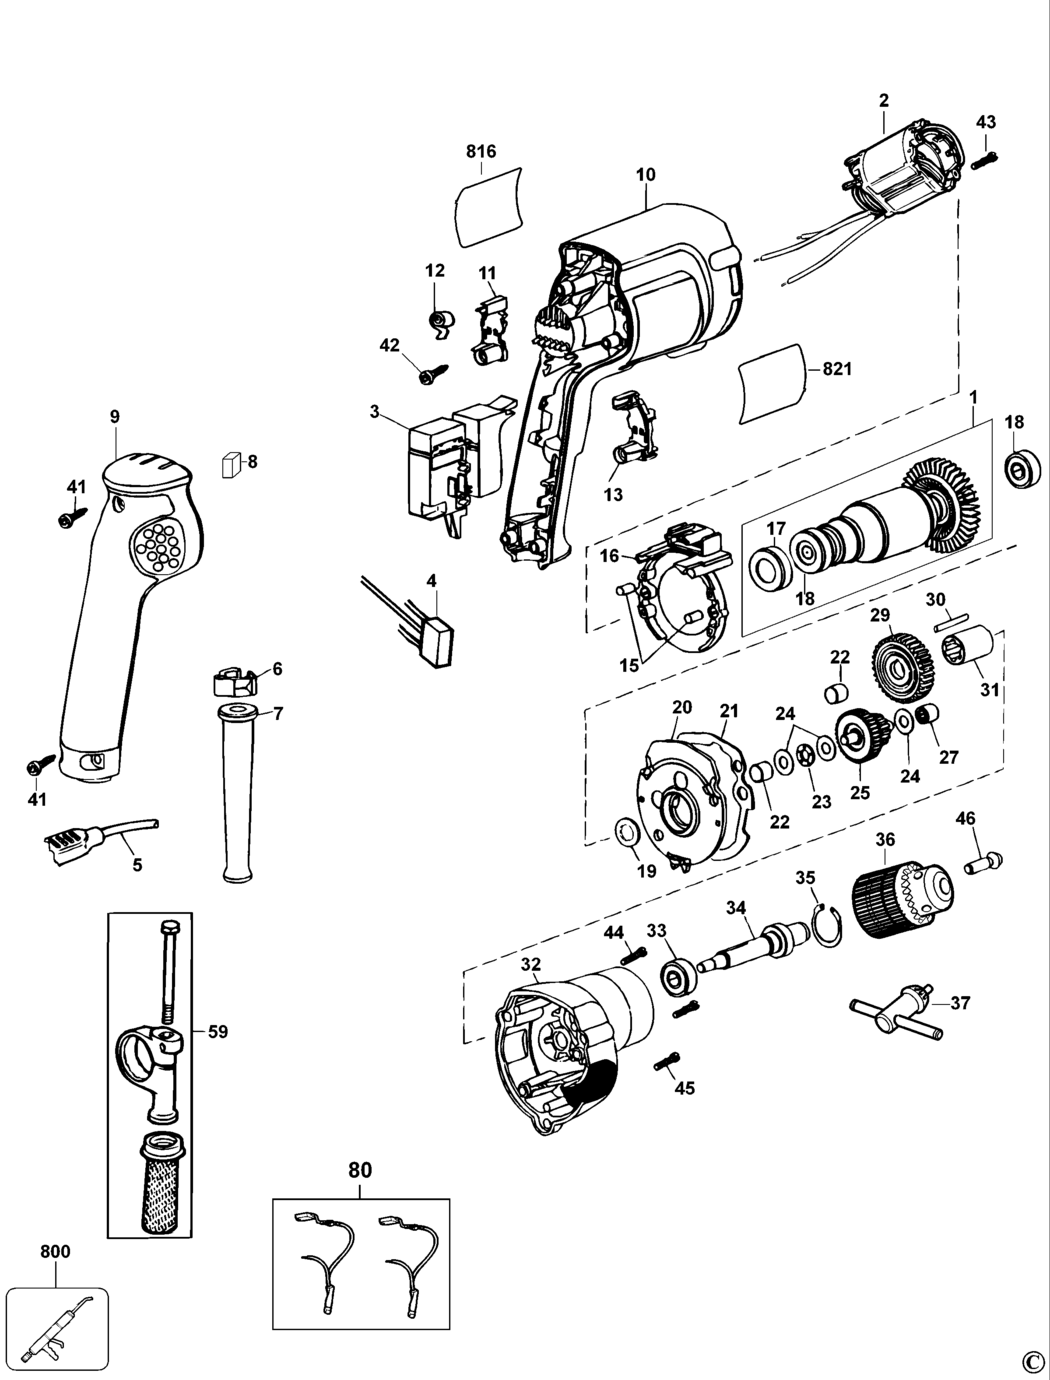 Dewalt D21101 Type 1 Rotary Hammer Drill Spare Parts